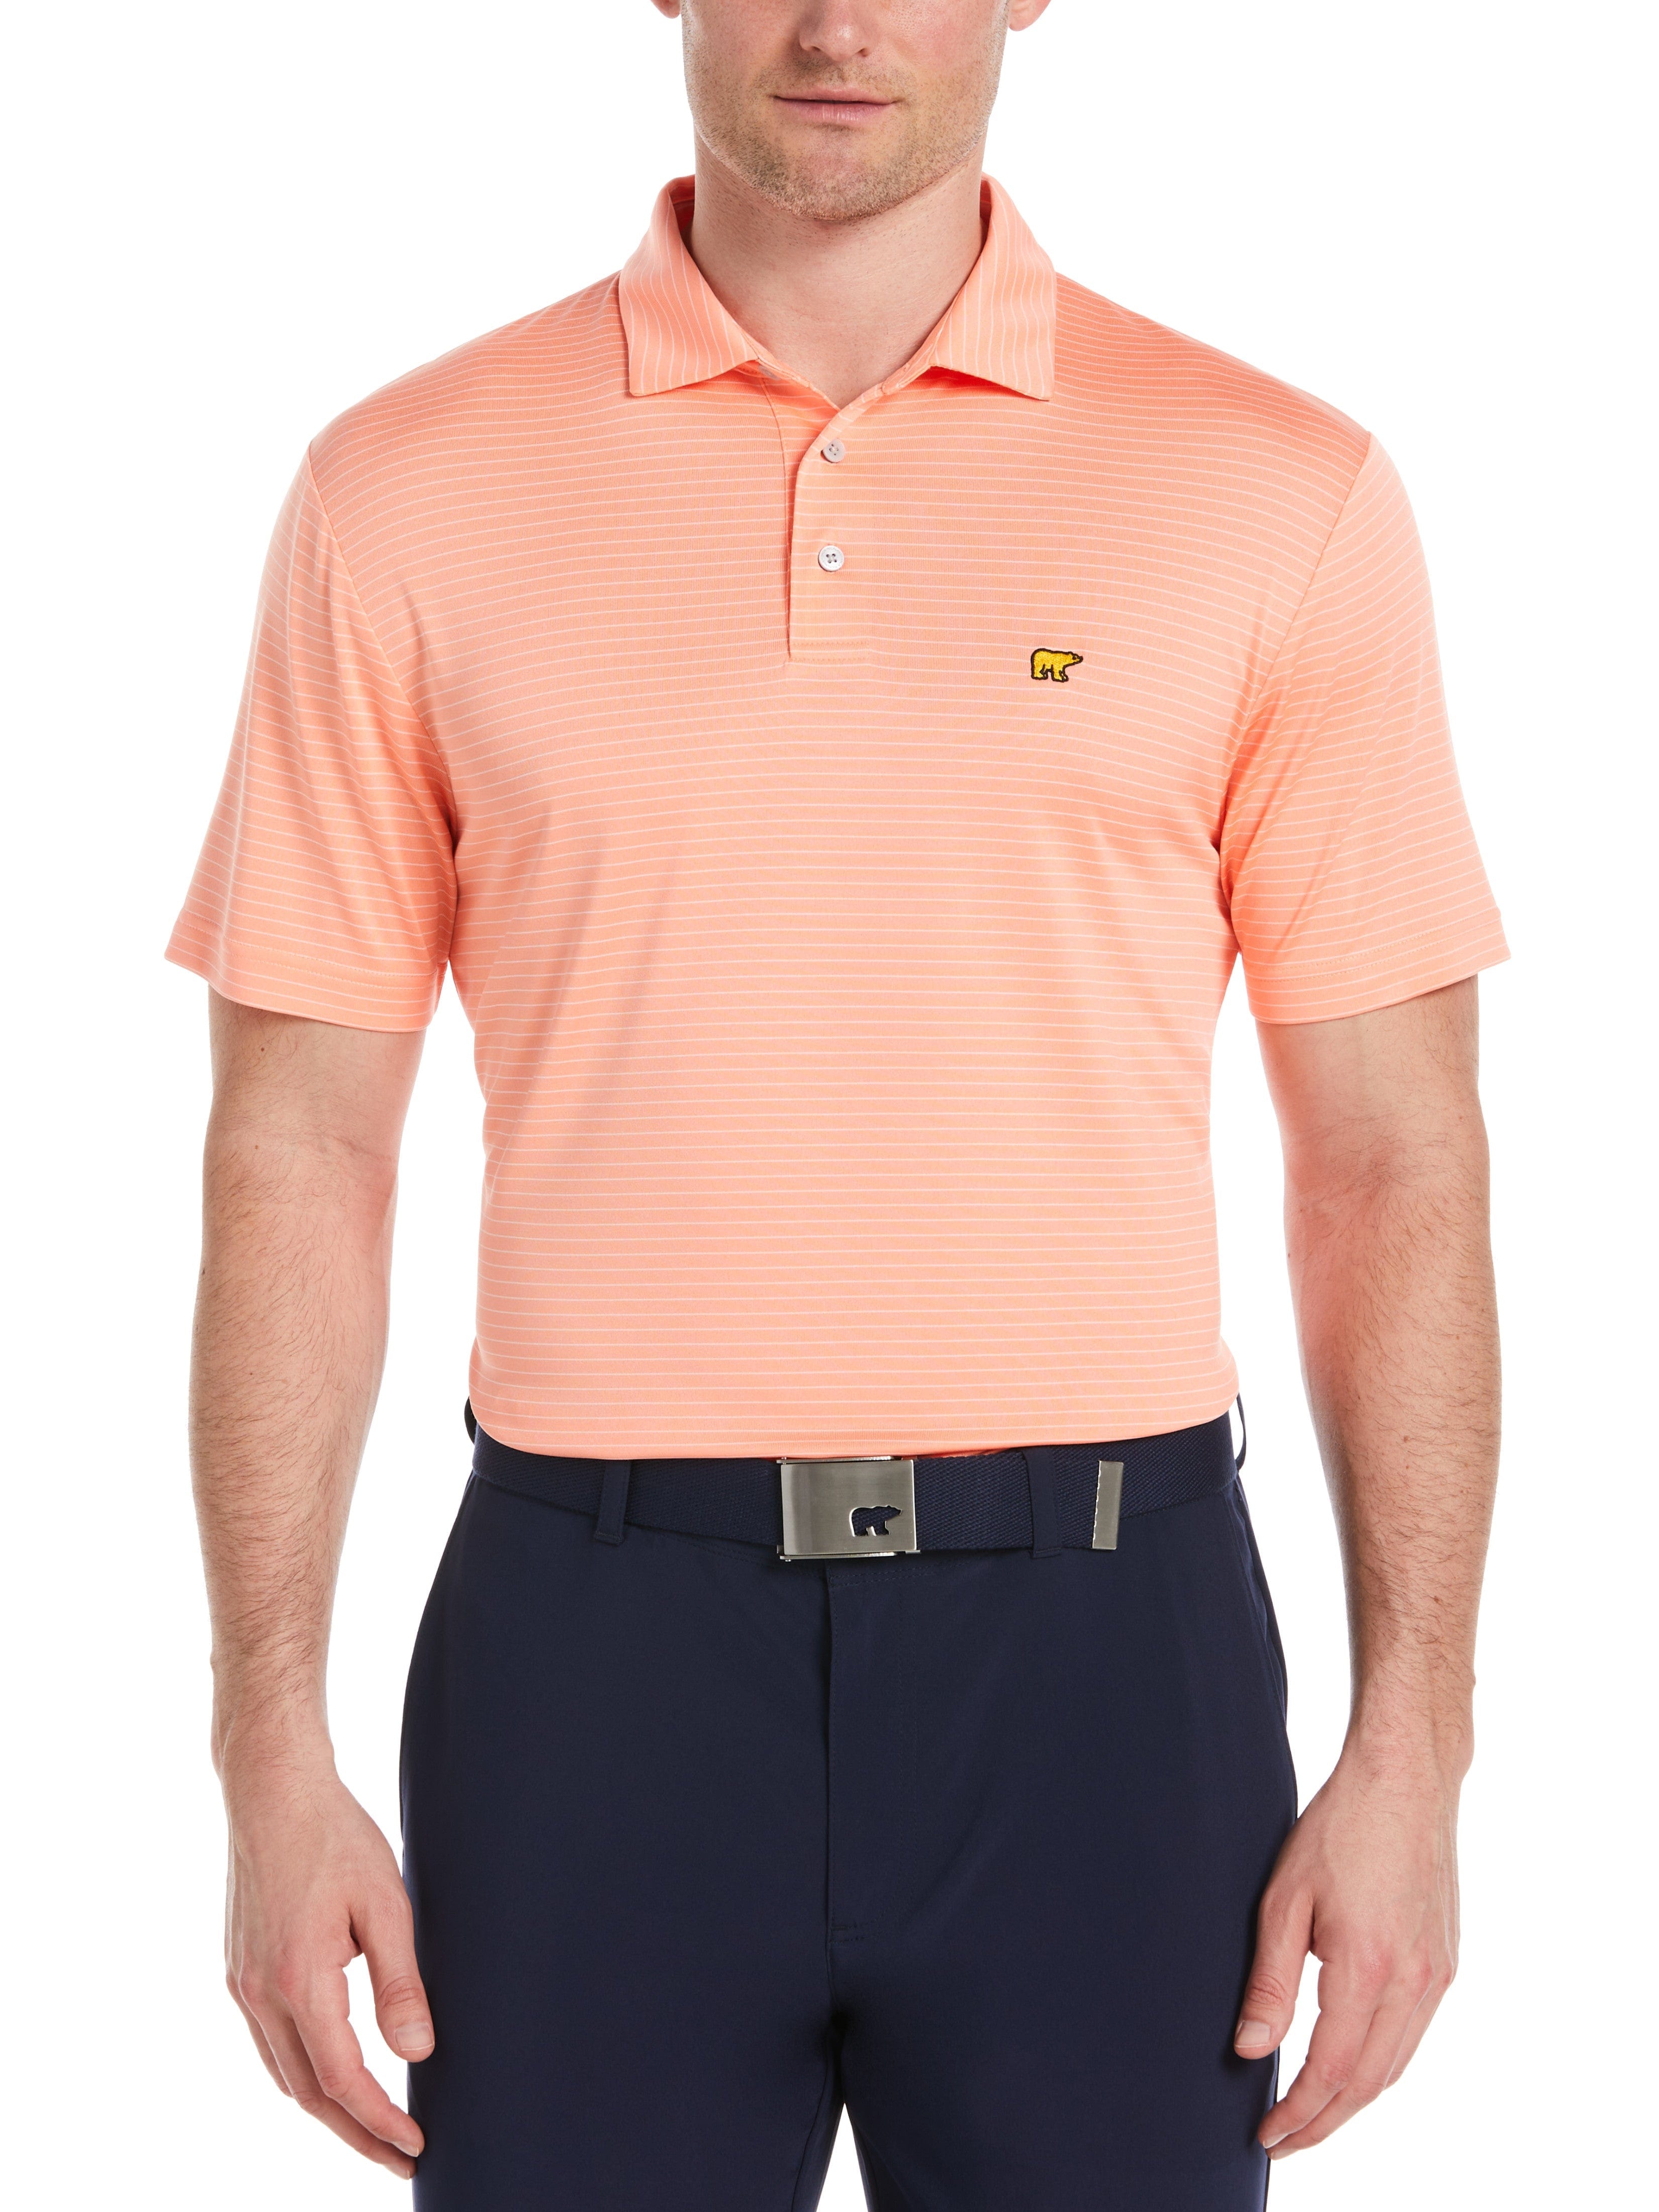 Jack Nicklaus Mens Two Color Stripe Golf Polo Shirt, Size Medium, Desert Flower Pink, 100% Polyester | Golf Apparel Shop